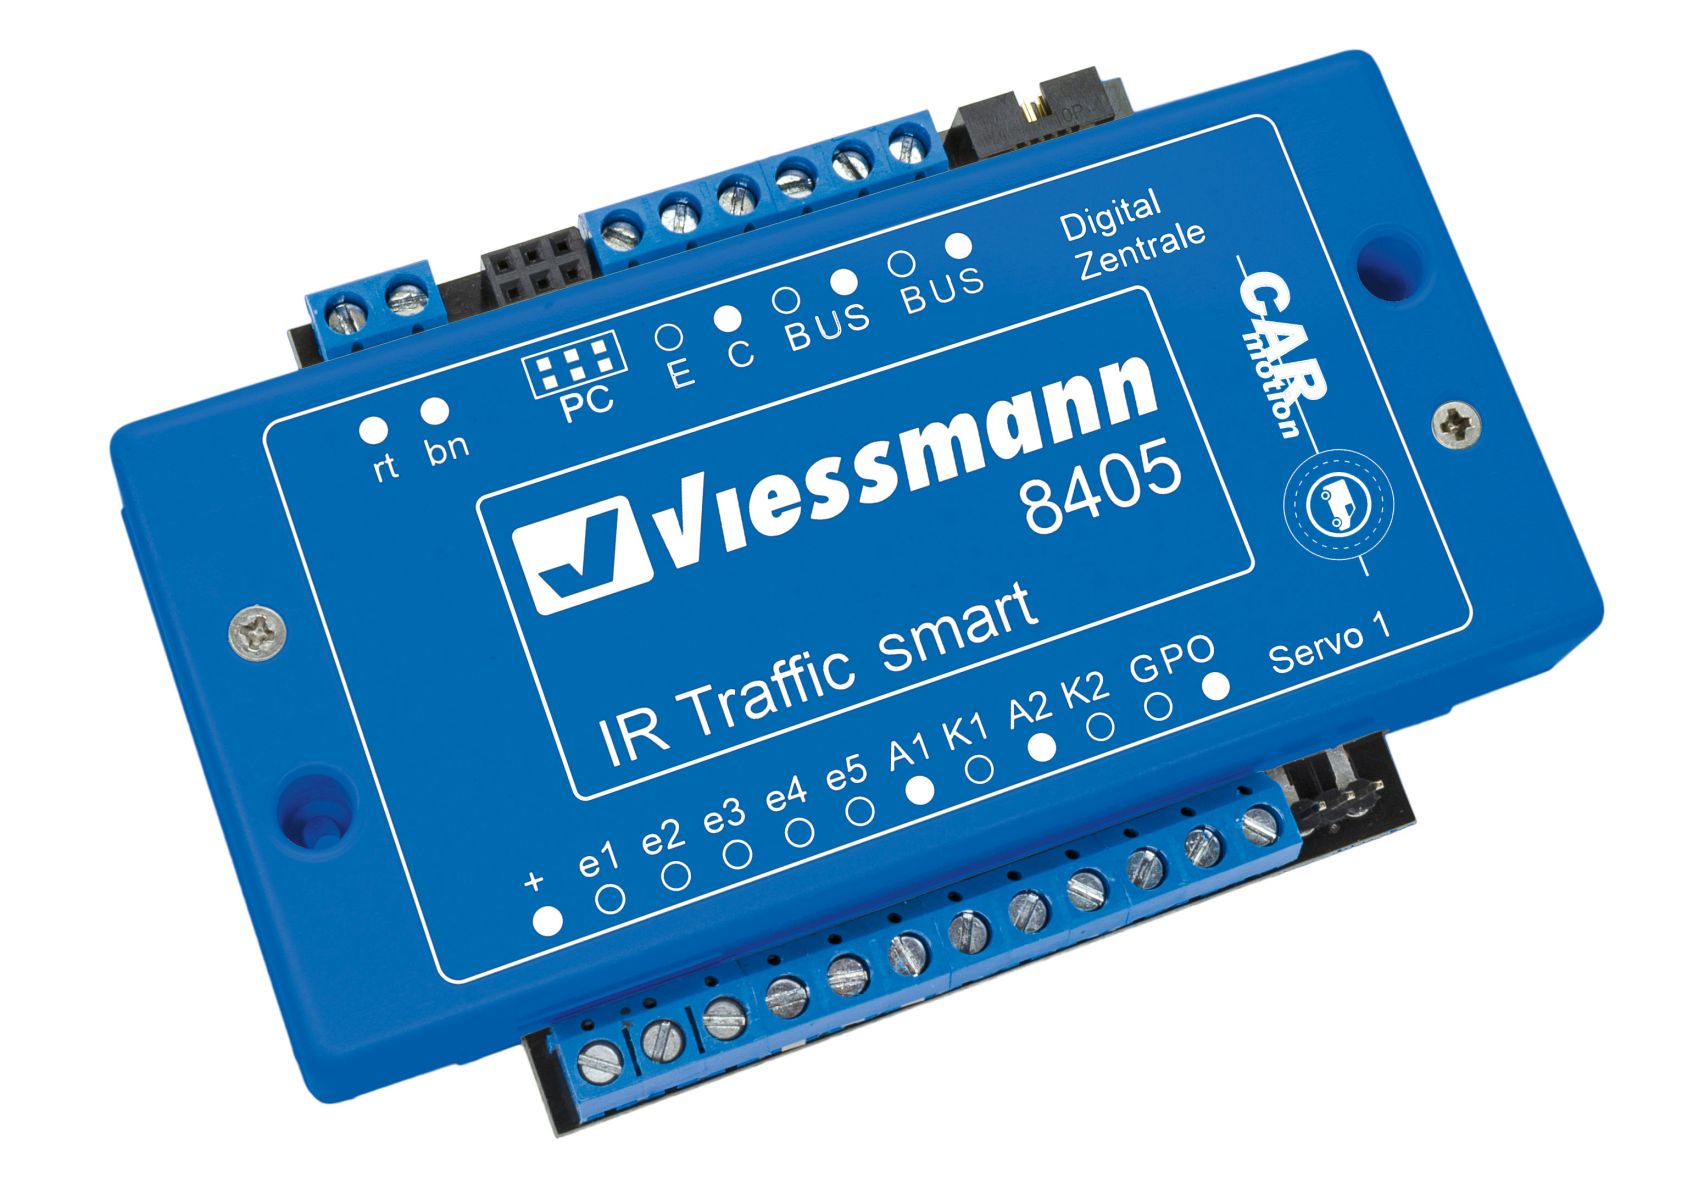 Viessmann 8405 - CarMotion IR Traffic smart